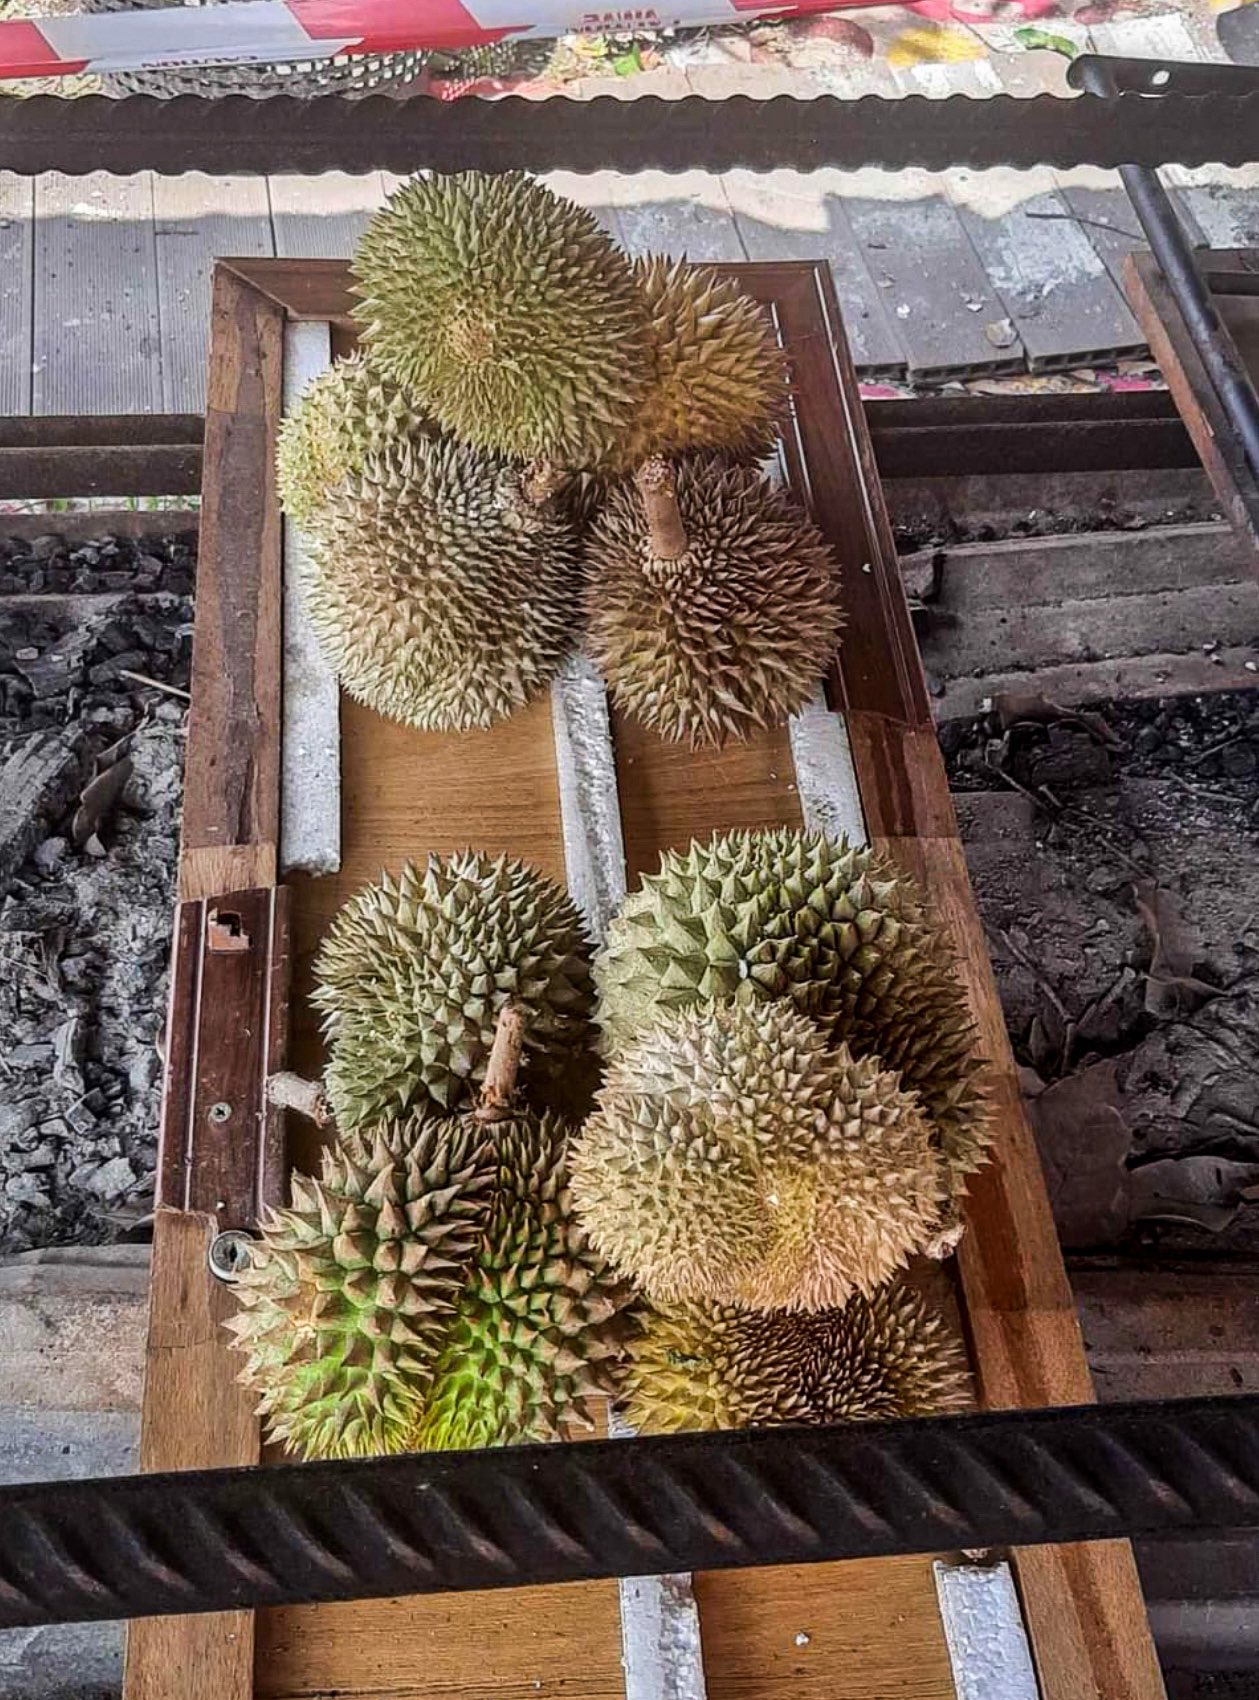 Durian ioi harga